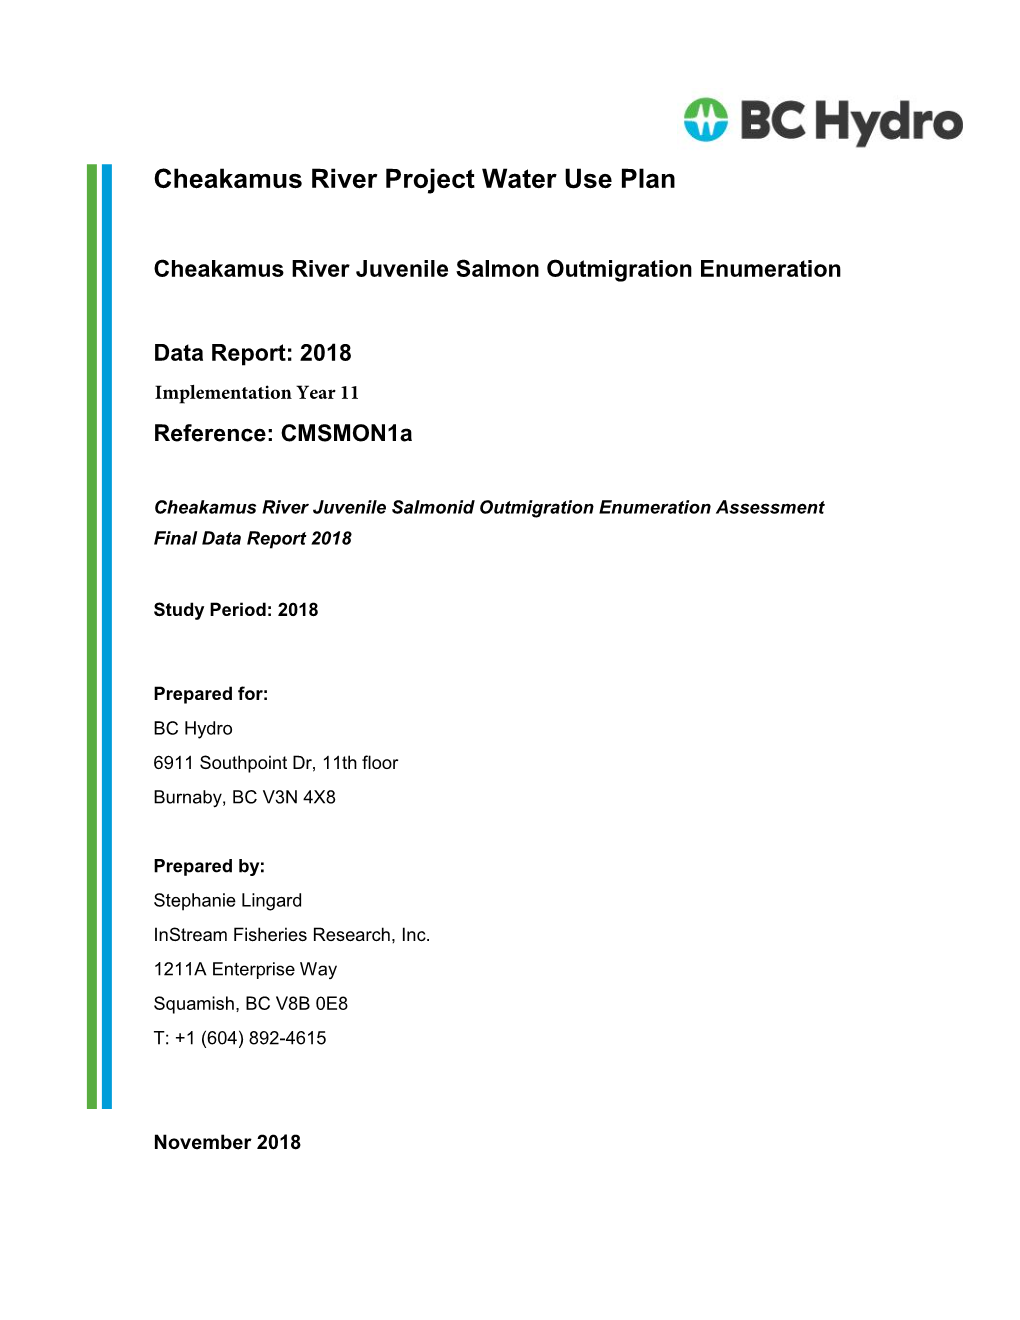 CMSMON-1A | Cheakamus River Juvenile Salmonid Outmigration